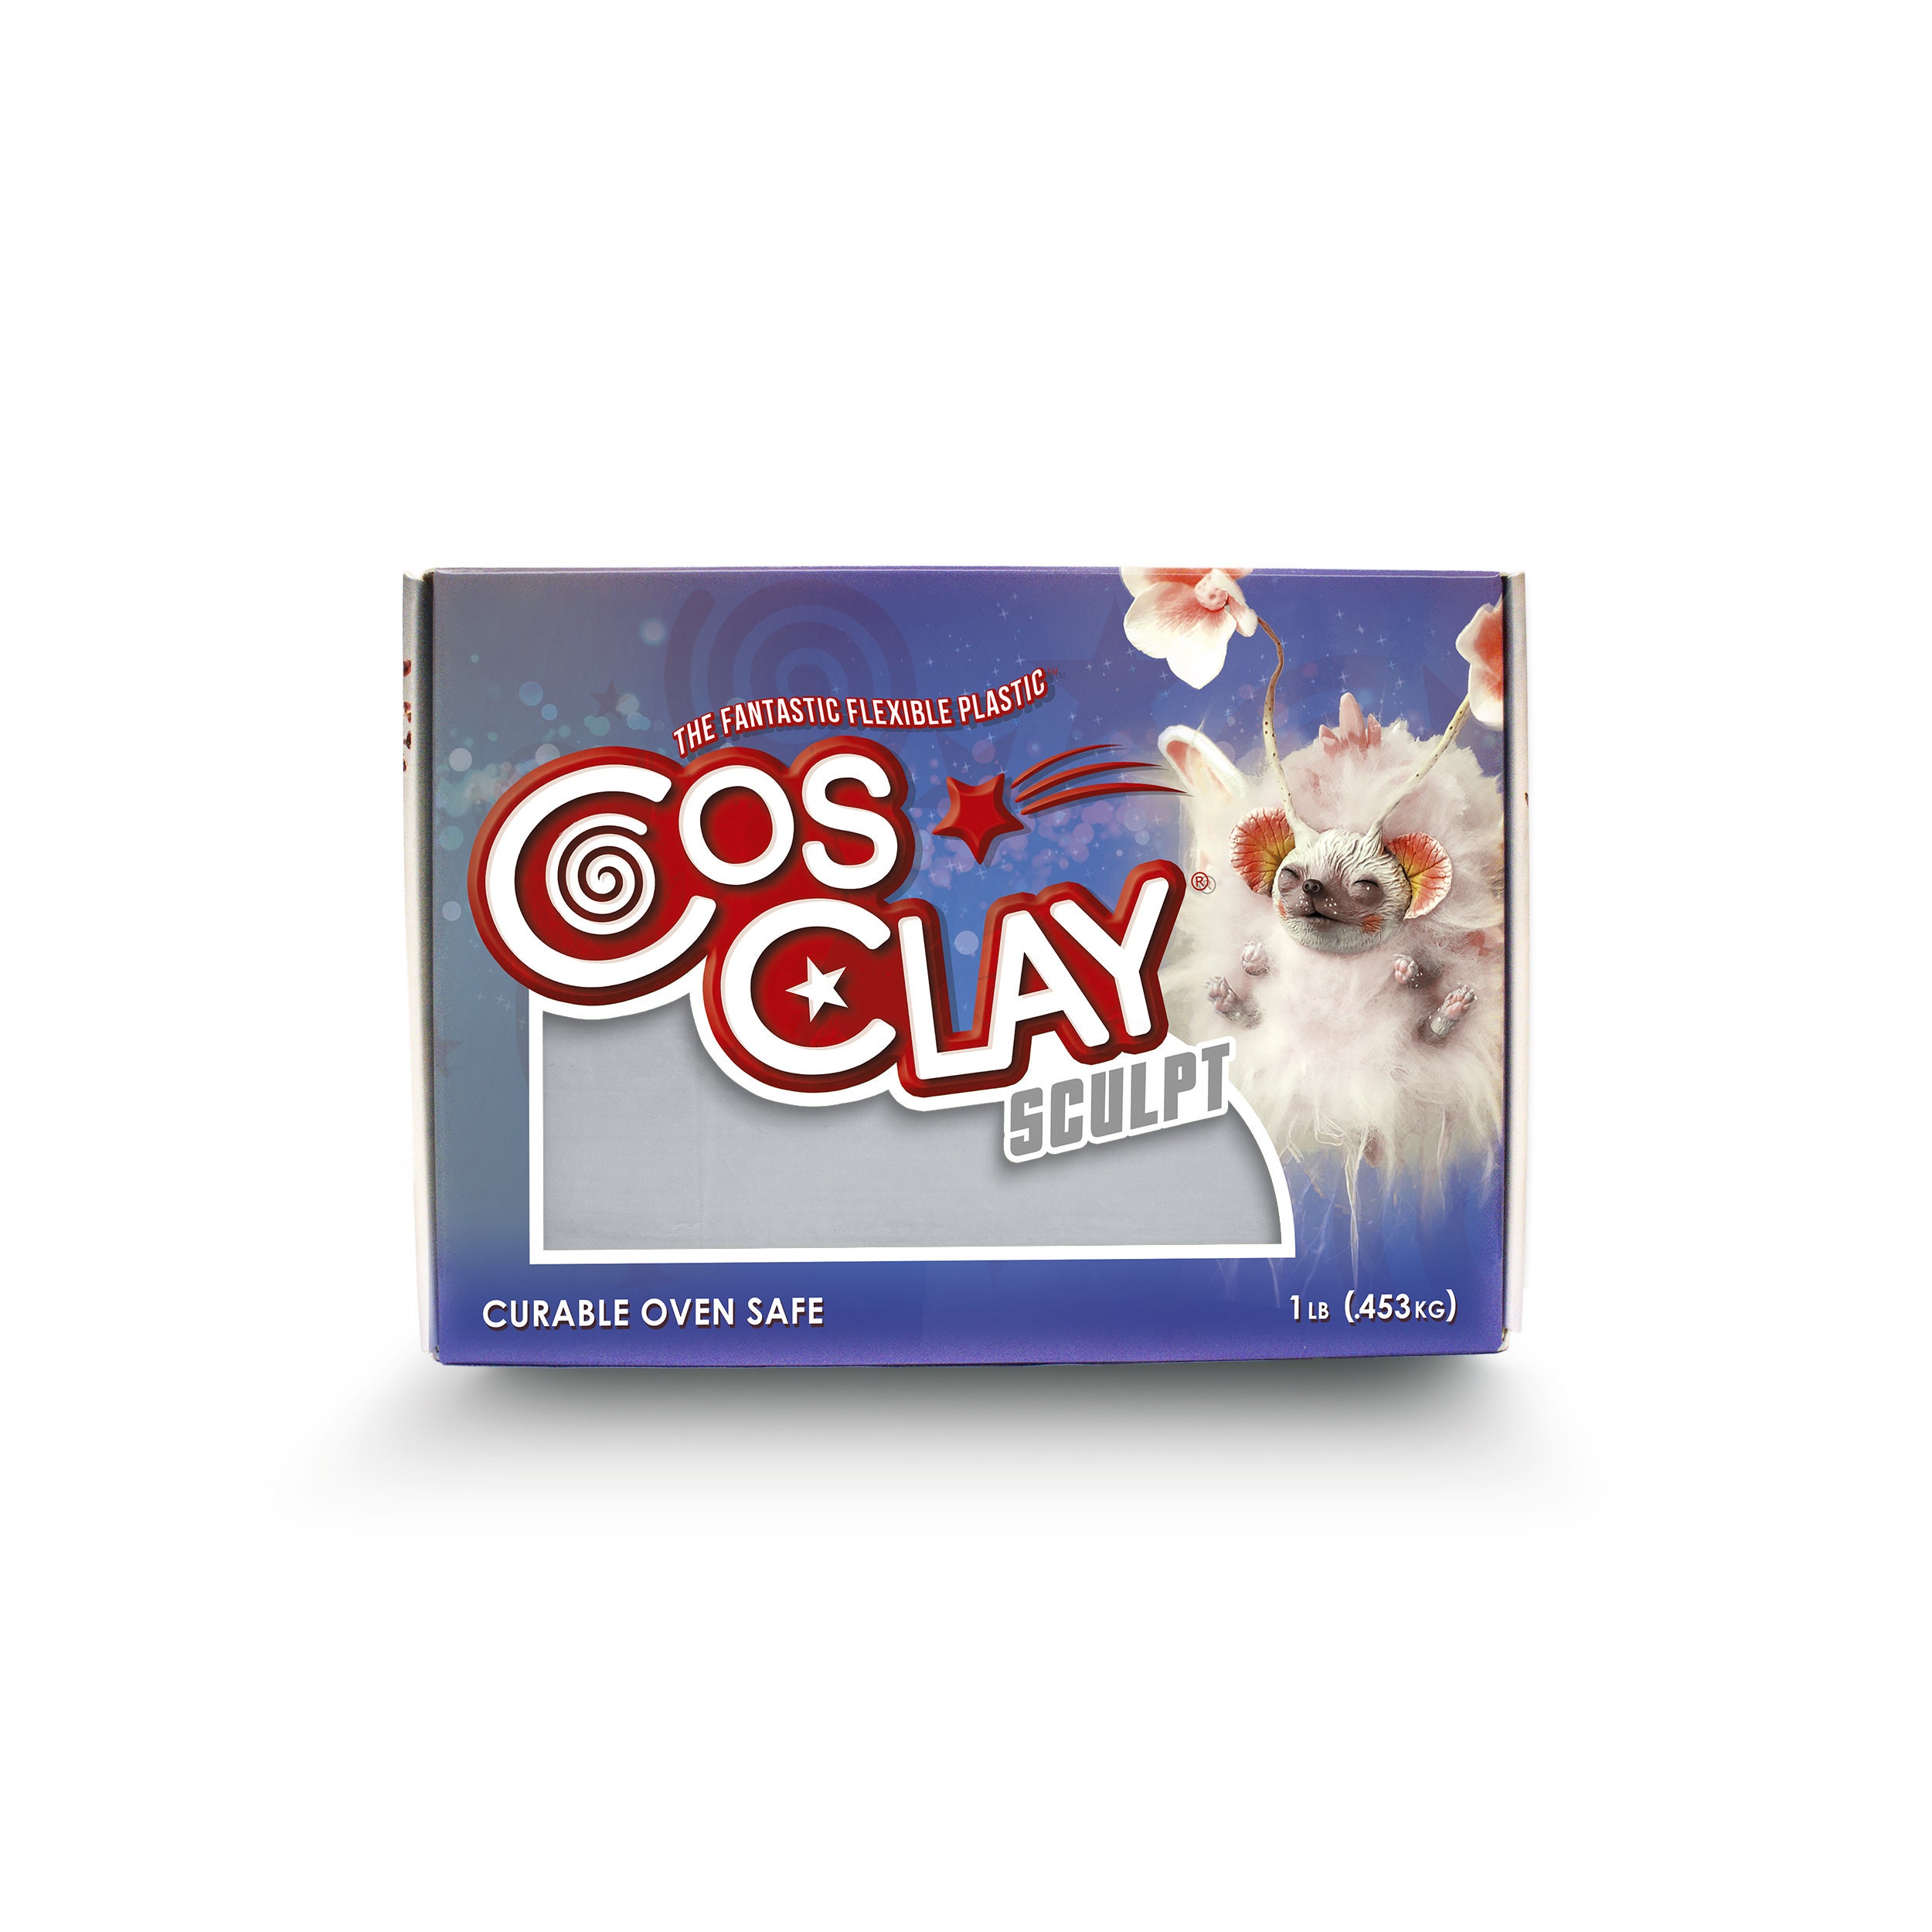 Cosclay Sculpt Gray Medium Firm, 453 G 1 Lb, Modelling Clay for